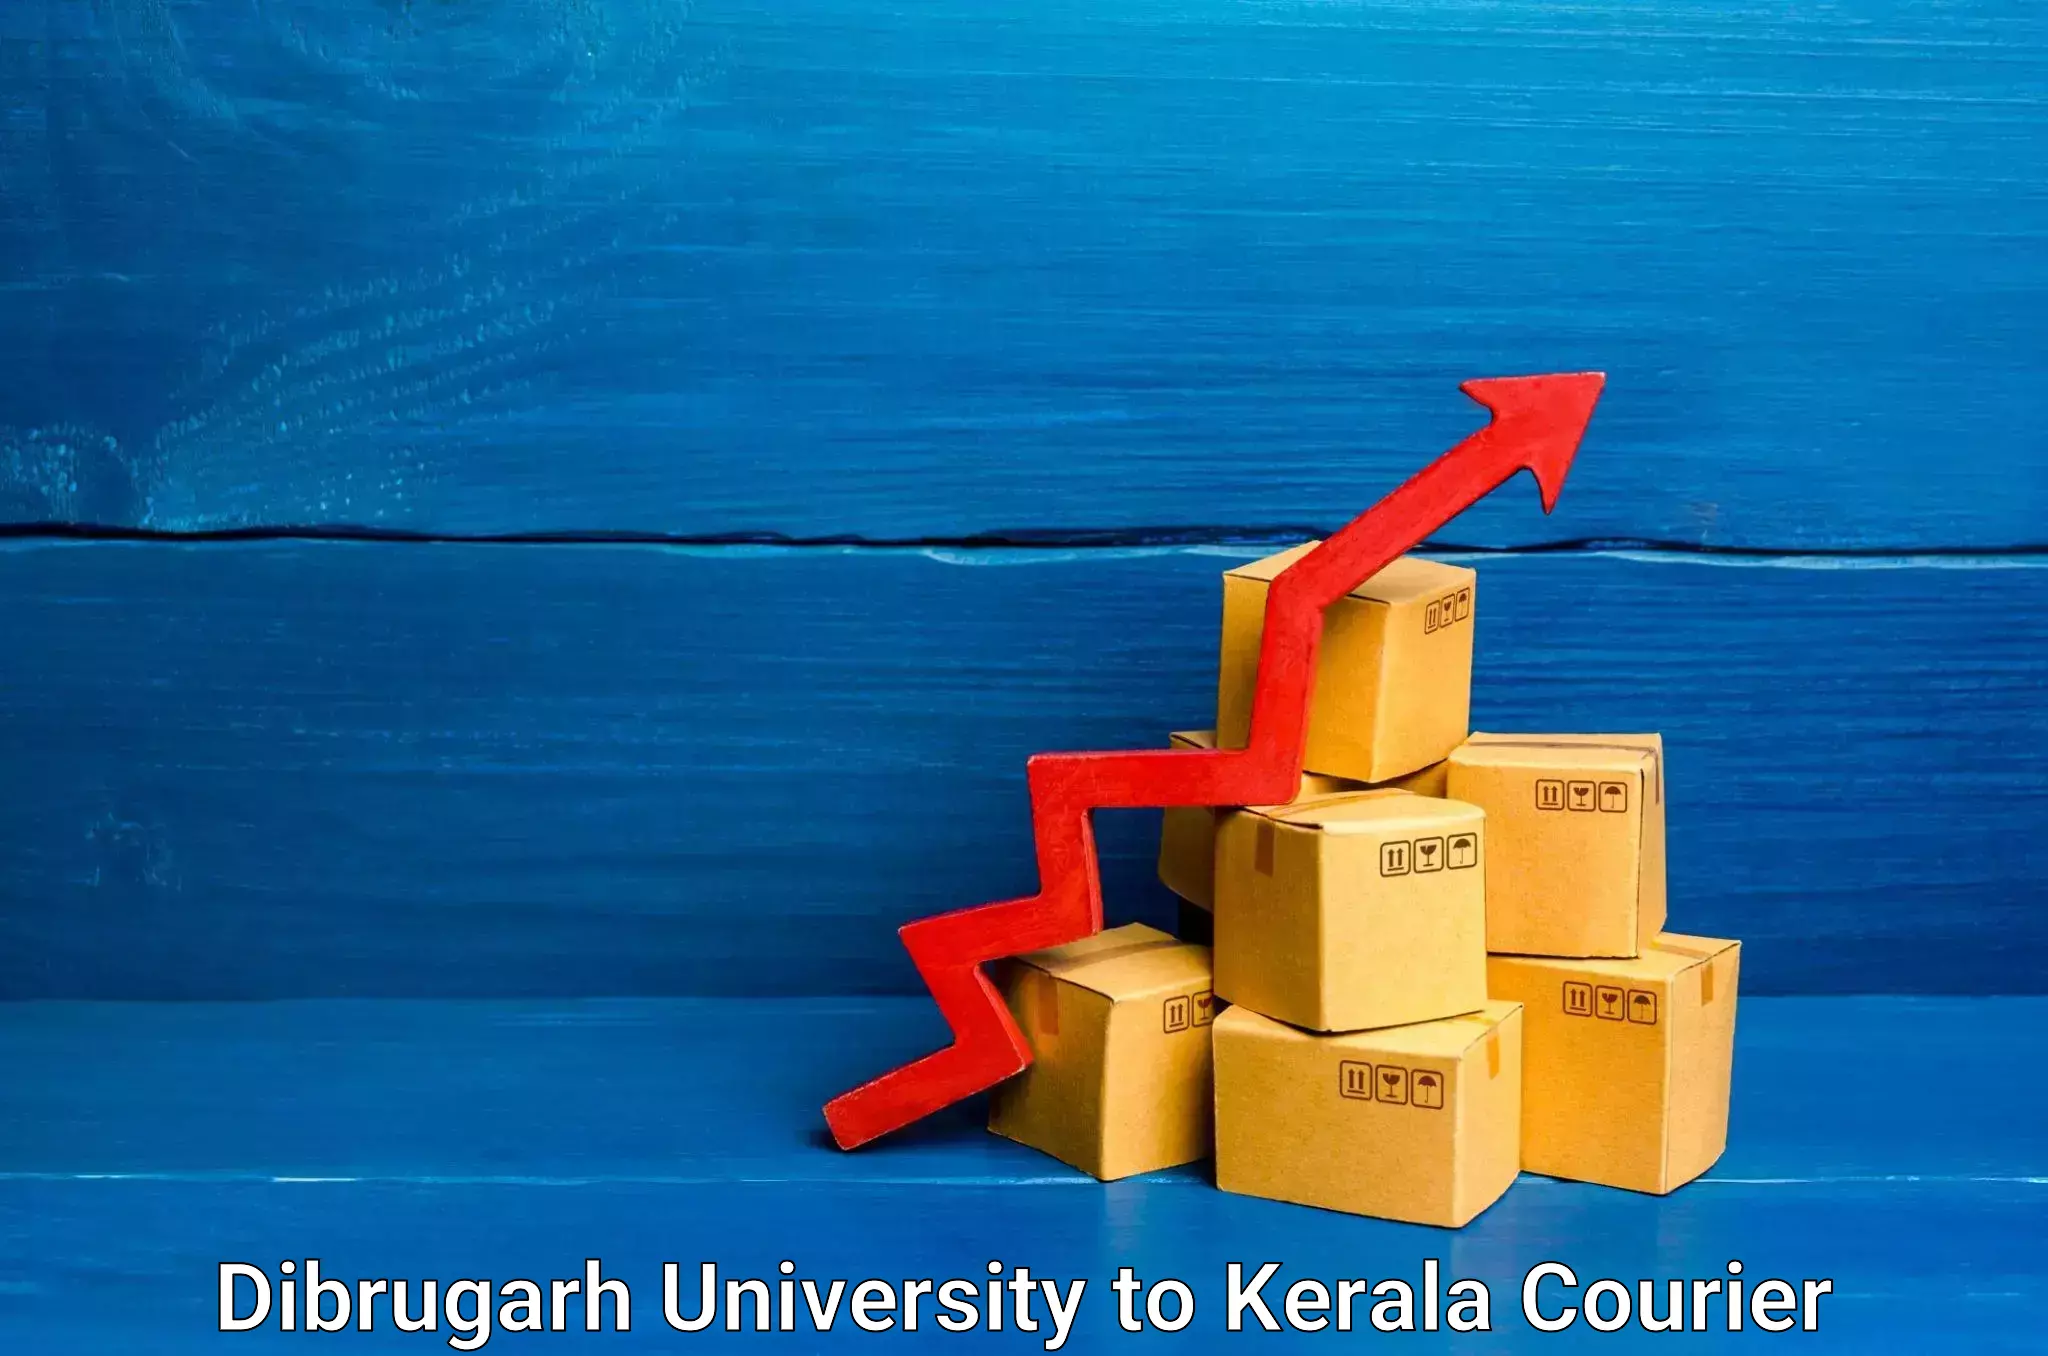 Next-generation courier services Dibrugarh University to Cochin Port Kochi